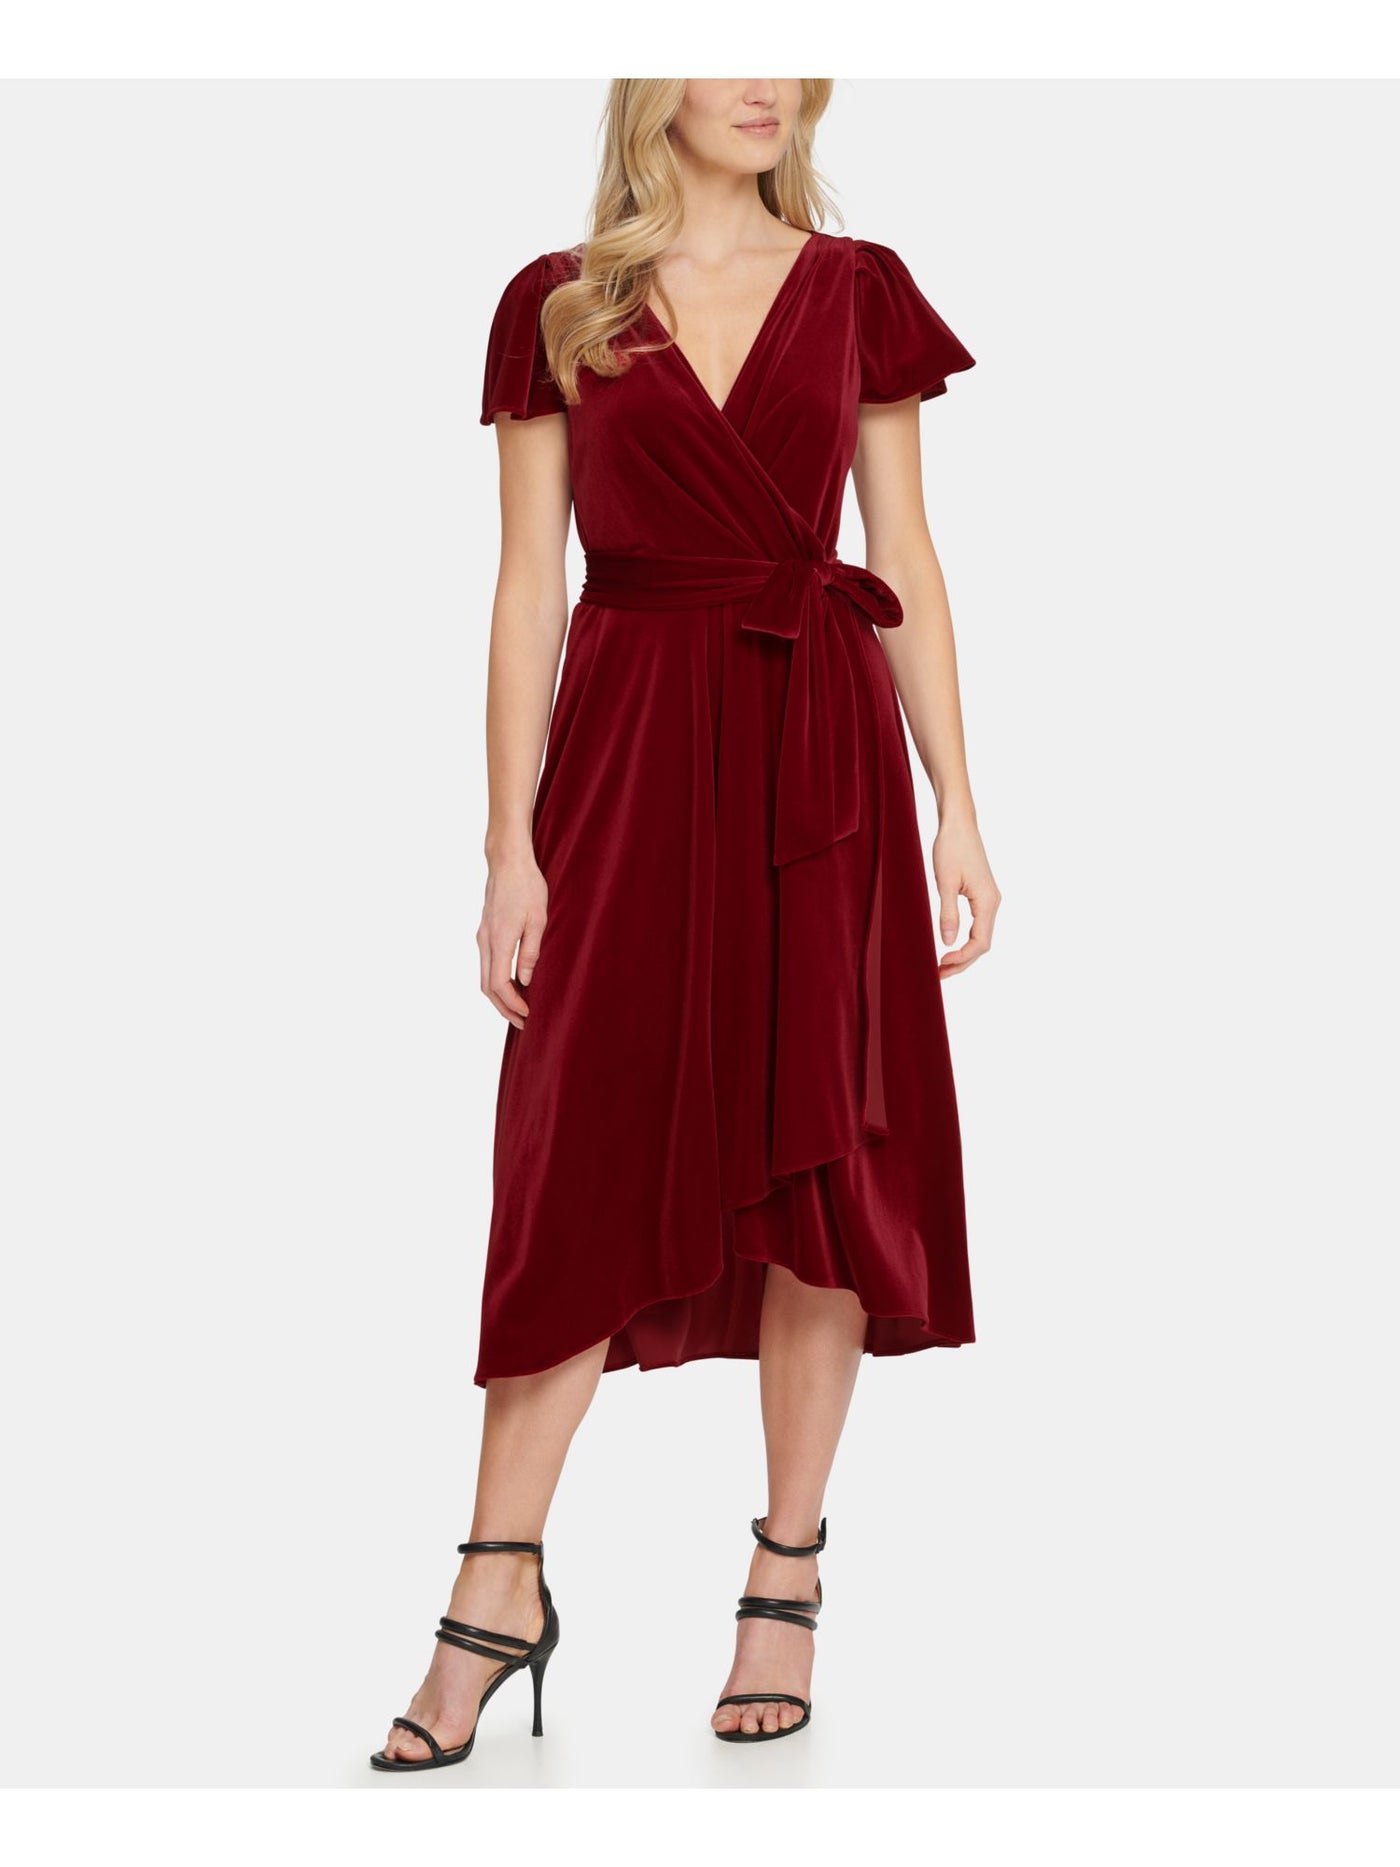 DKNY Womens Red Belted Tie Velvet Cap Sleeve V Neck Tea-Length Evening Empire Waist Dress 2